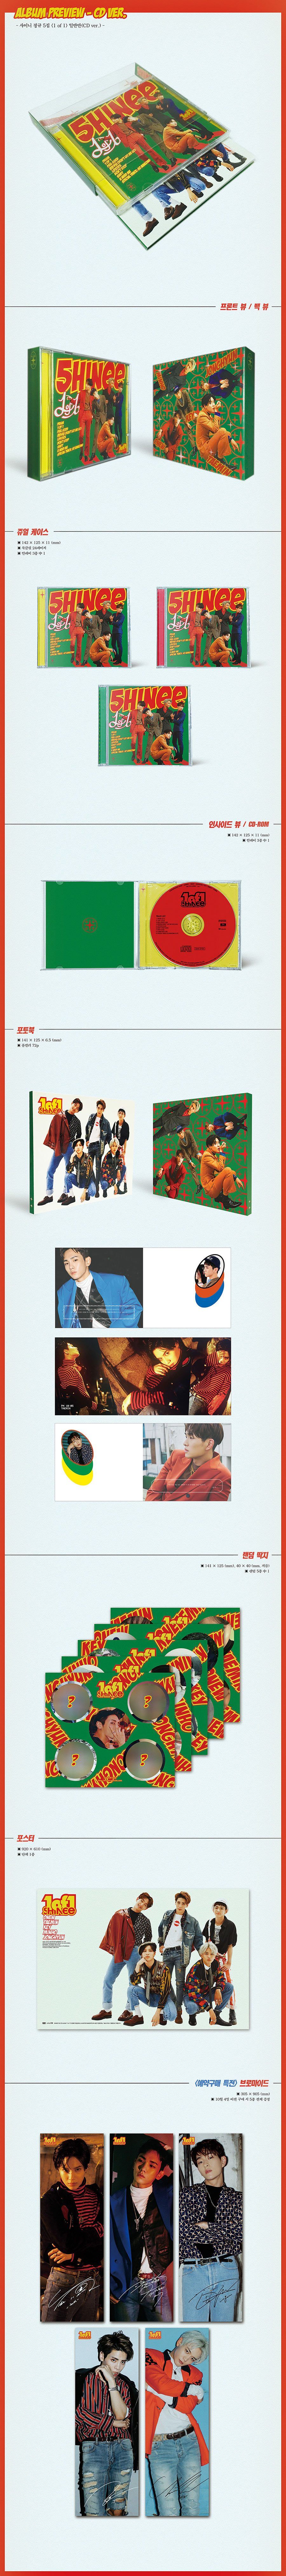 CD version of SHINee's 5th album "1 of 1" / Image Source: SM Entertainment via Instiz